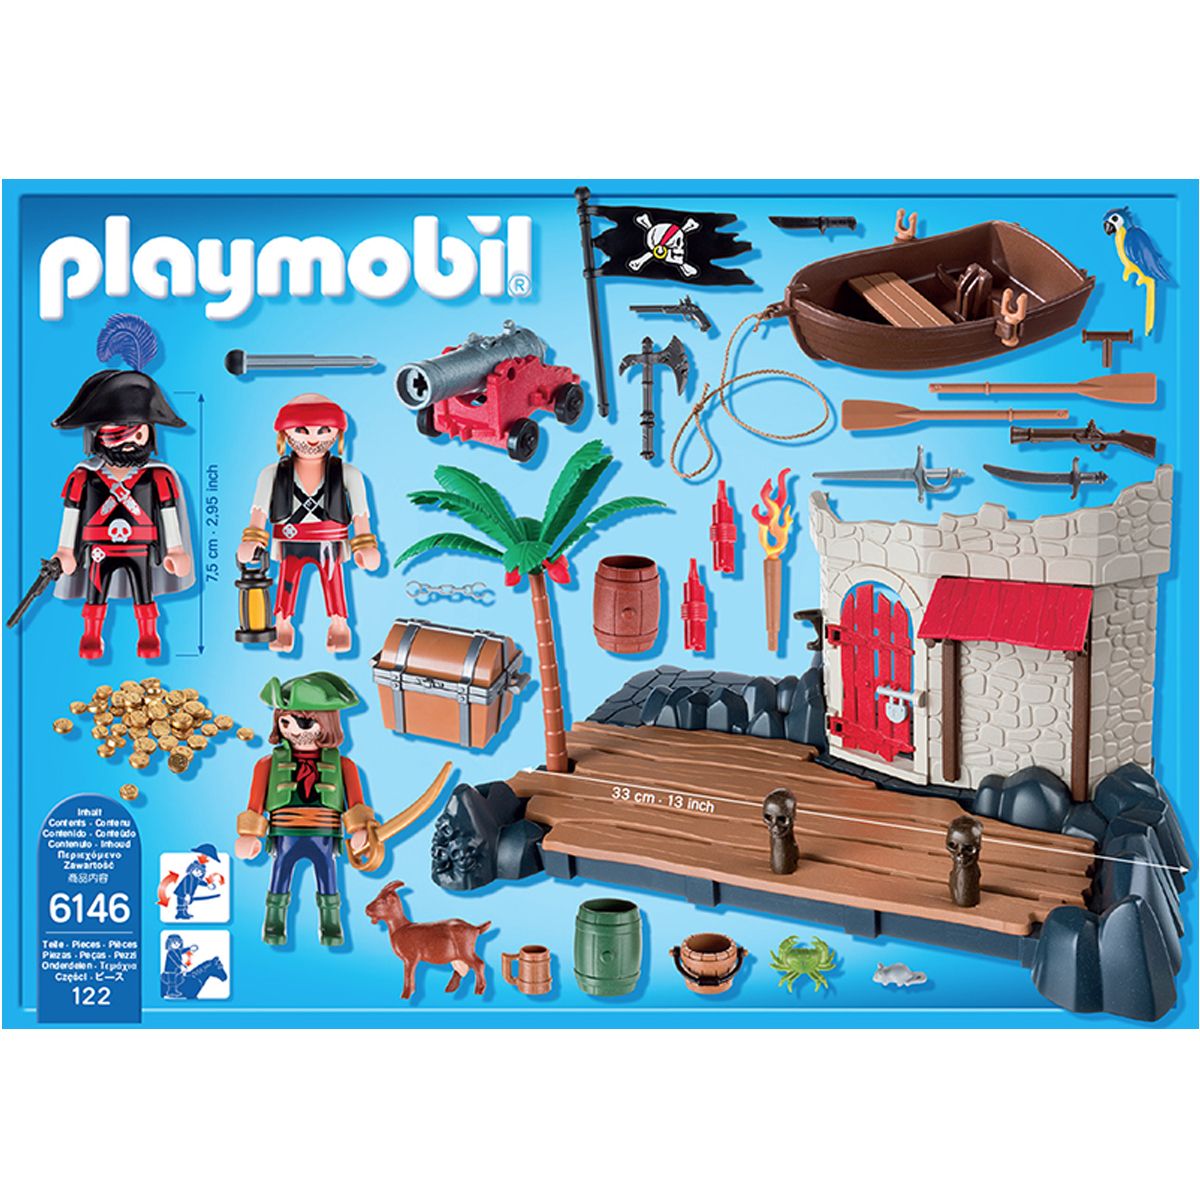 pirate playmobil